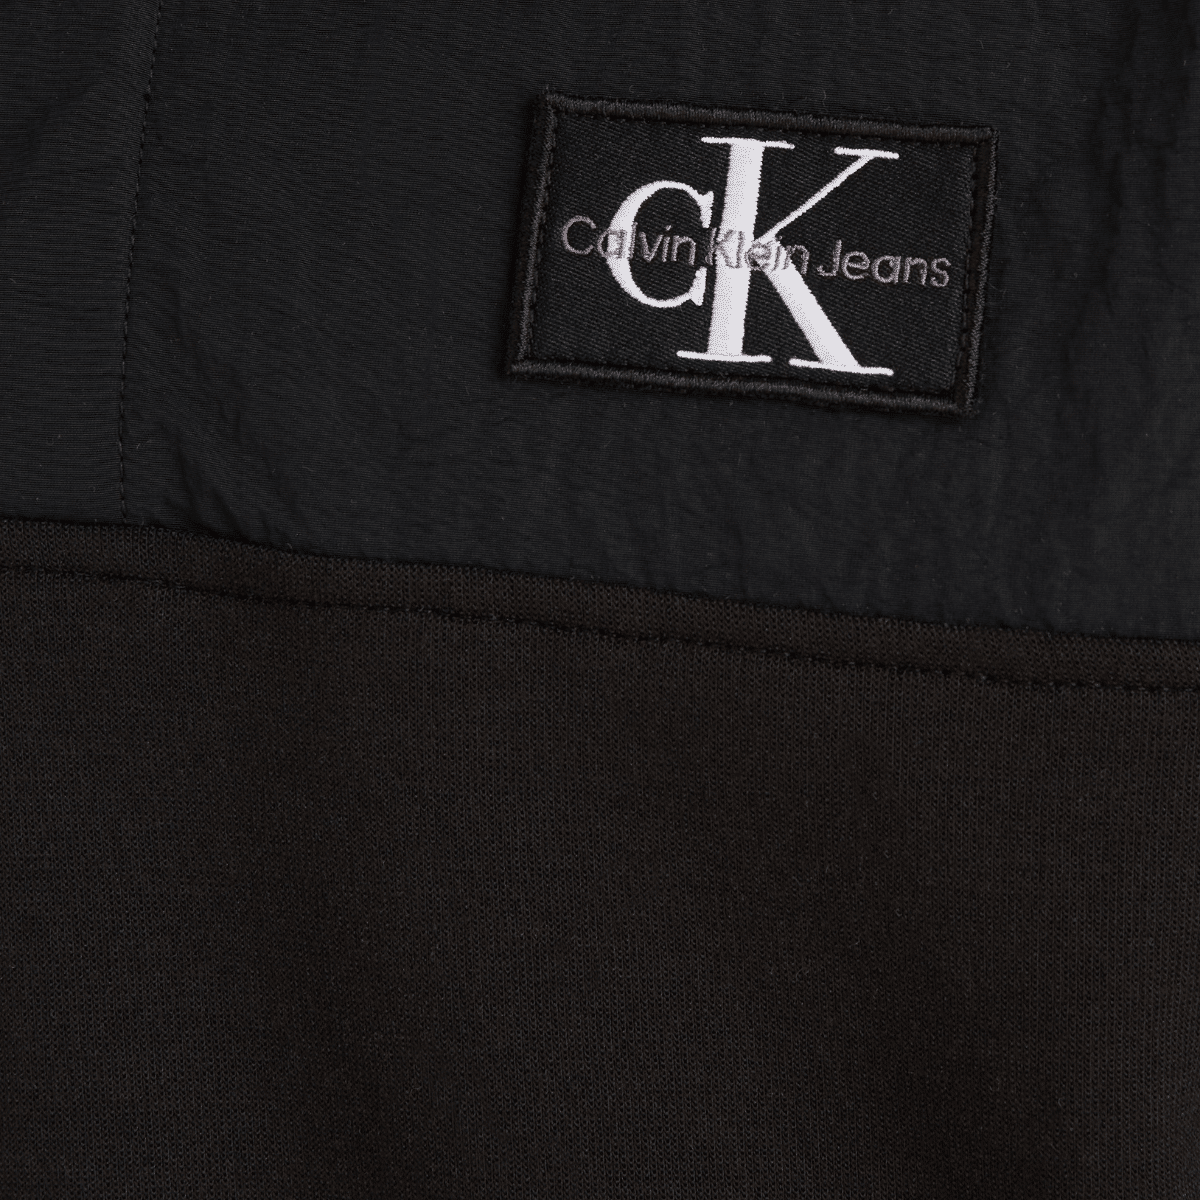 calvin klein unisex childrens black hoodie with white logo close up of logo